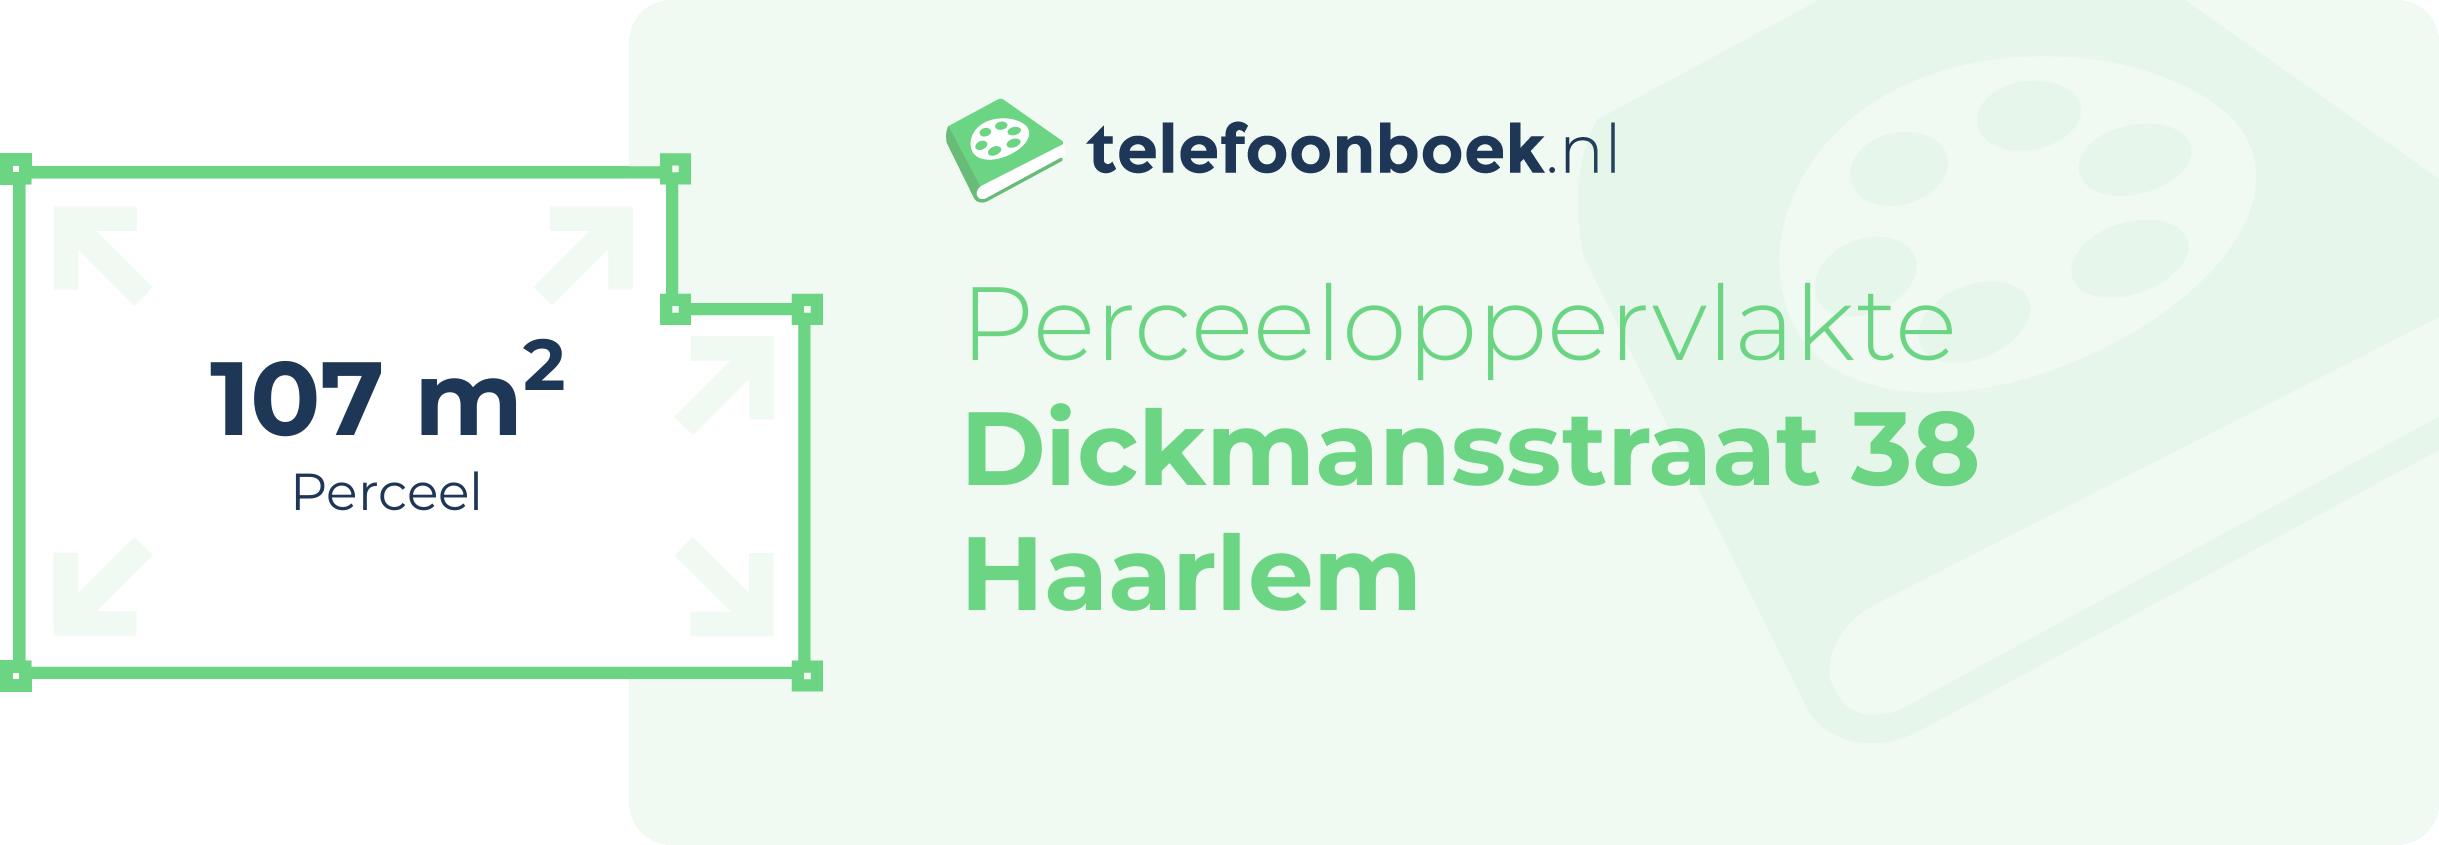 Perceeloppervlakte Dickmansstraat 38 Haarlem